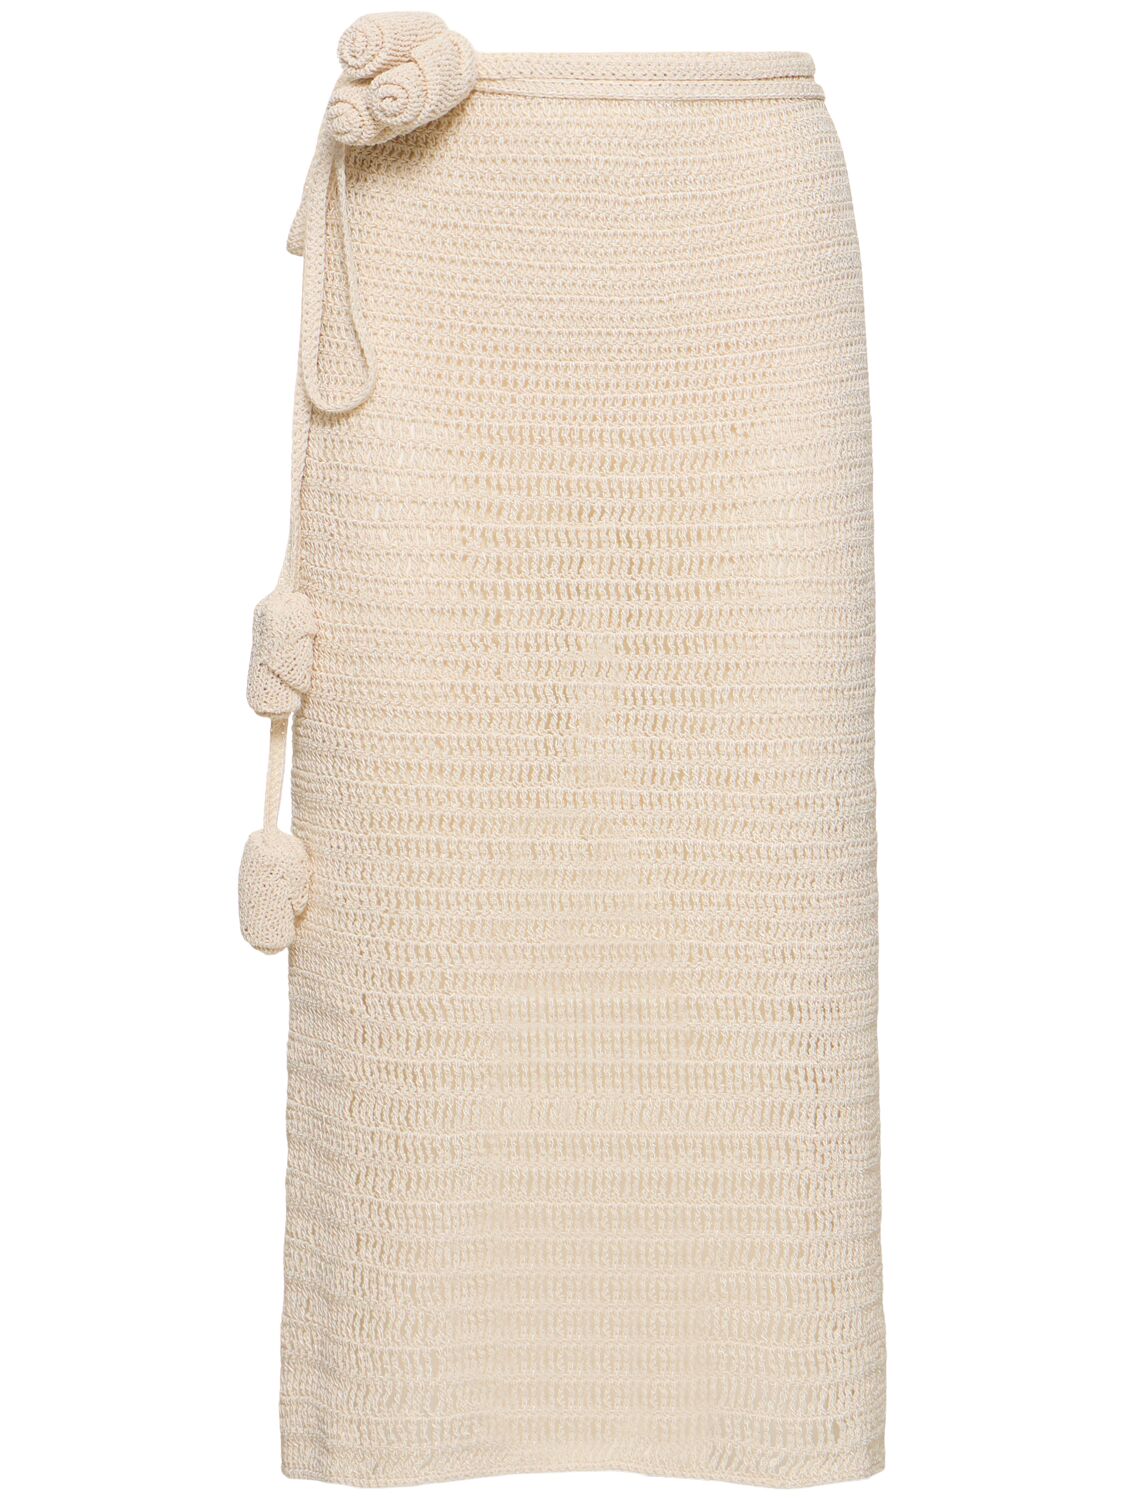 Image of Crocheted Cotton Blend Skirt